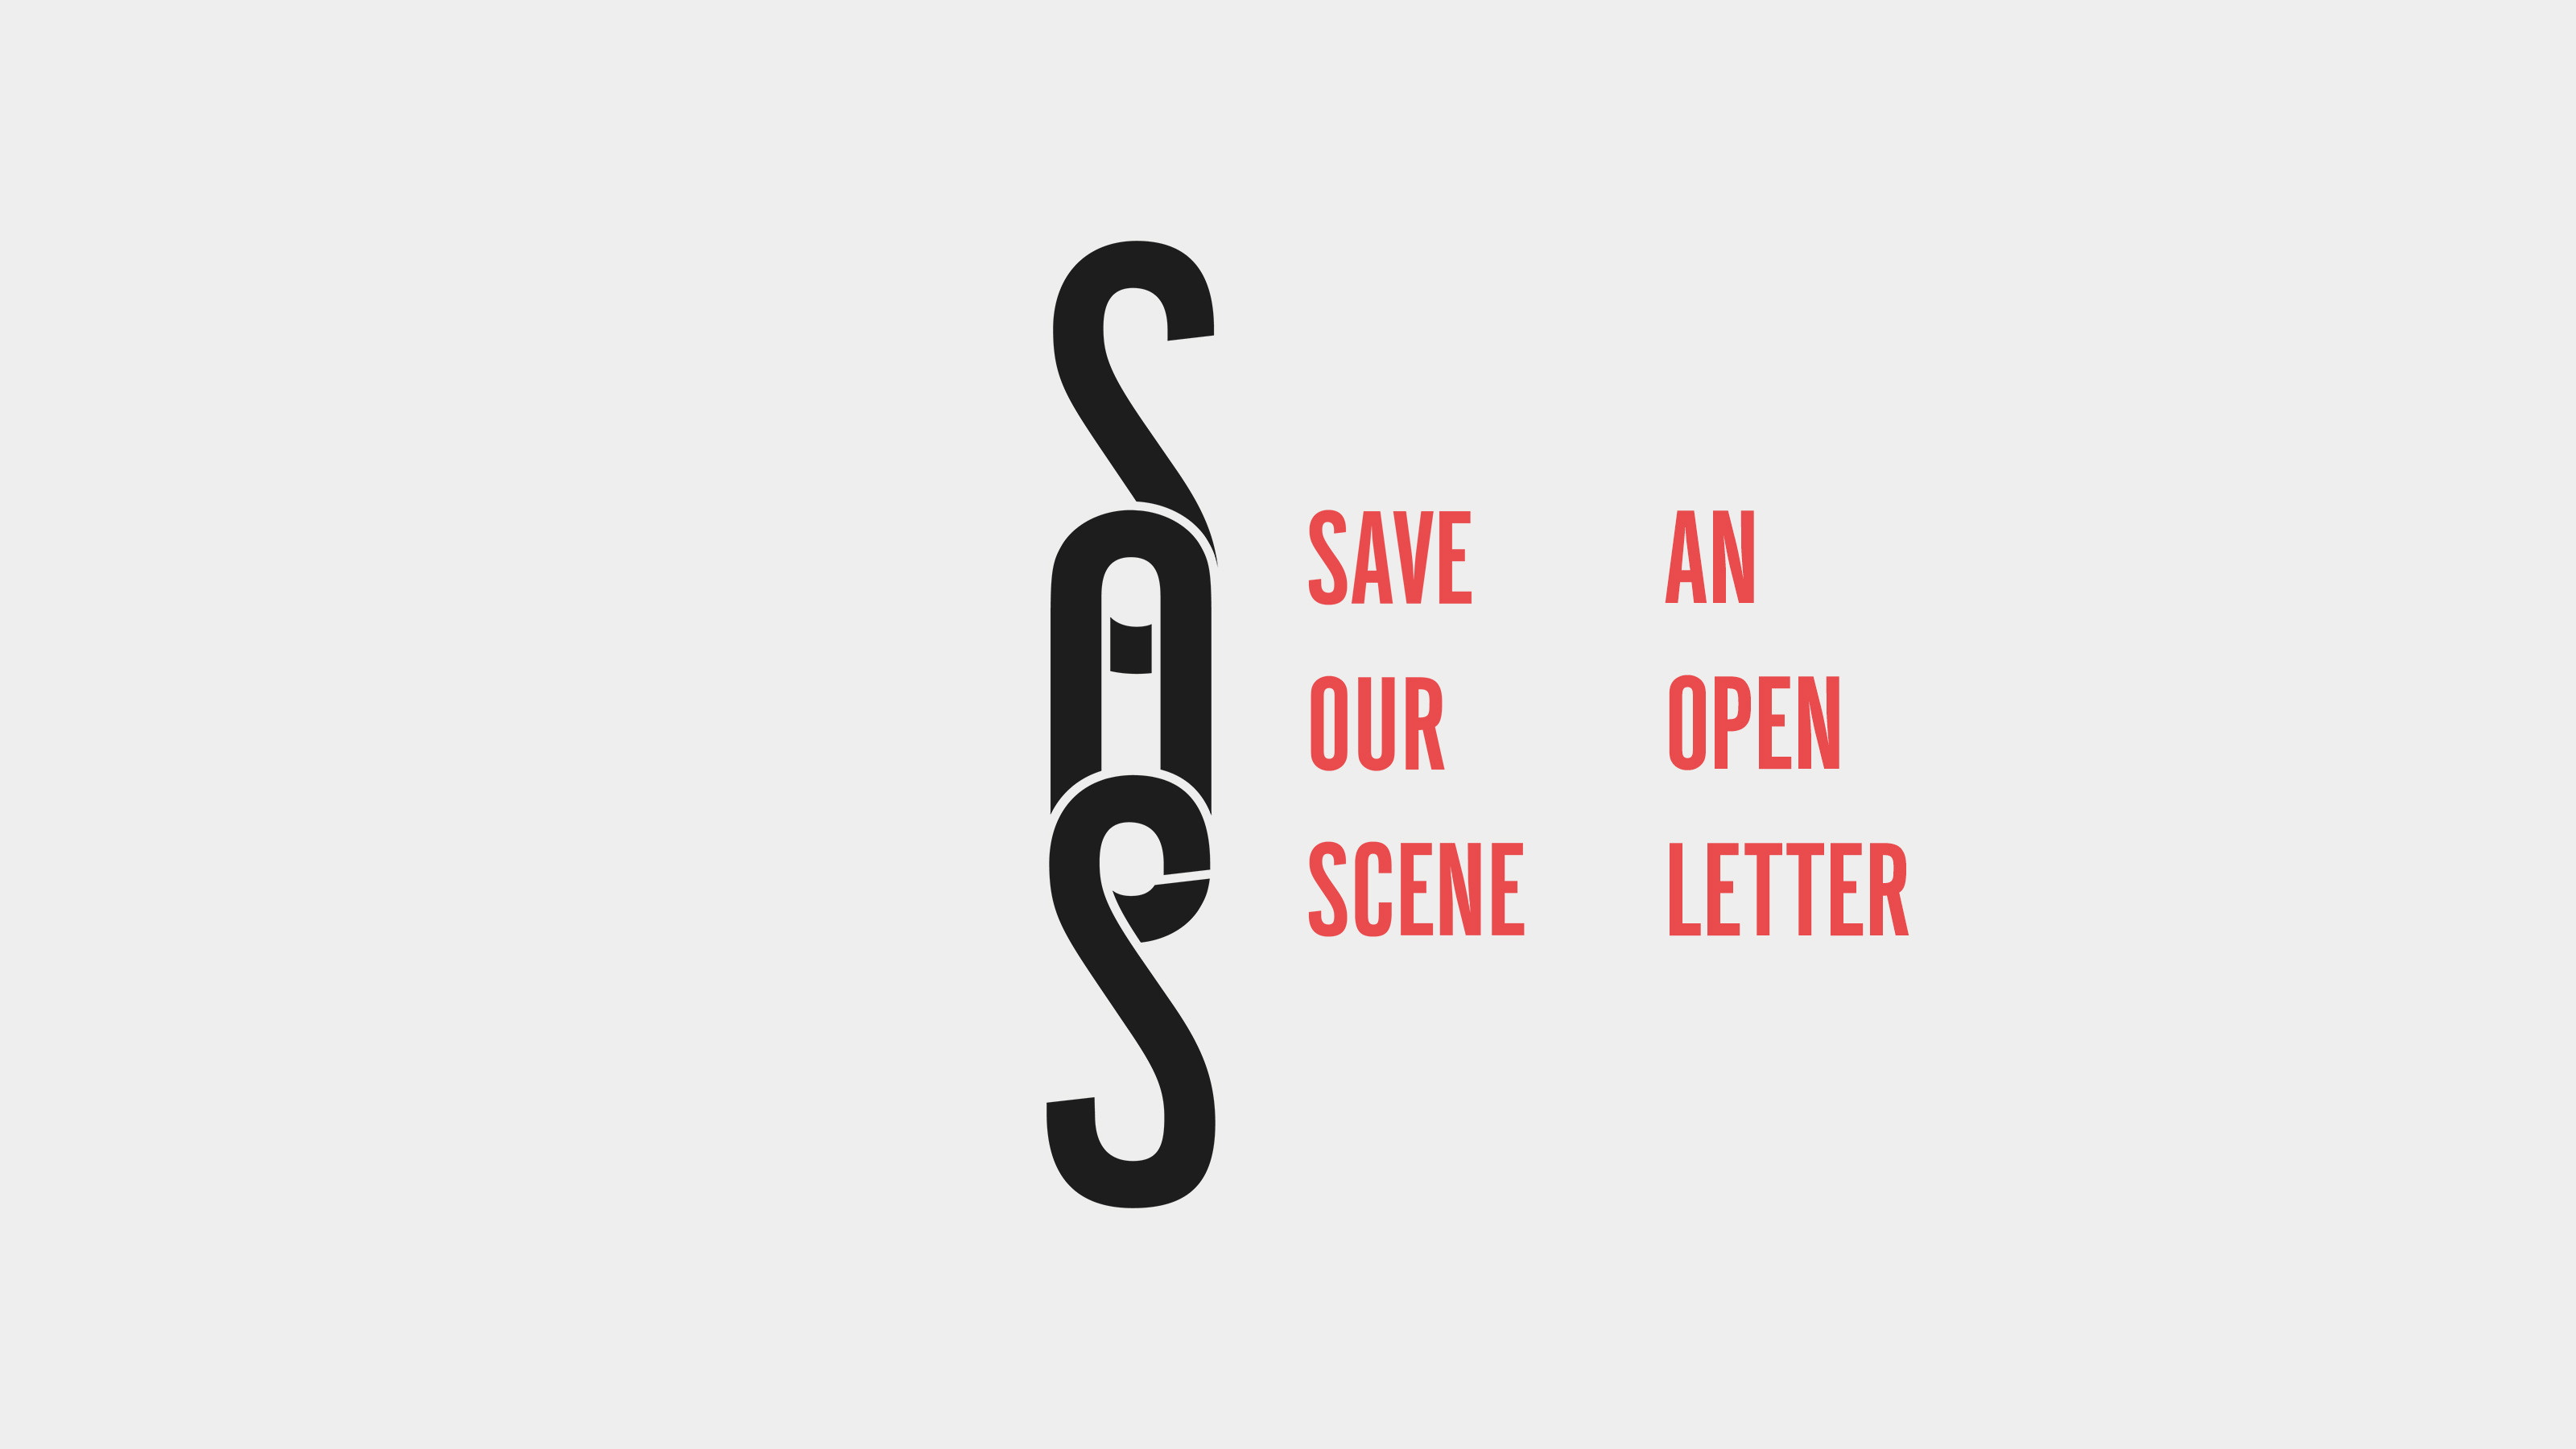 Save Our Scene: オープンレター